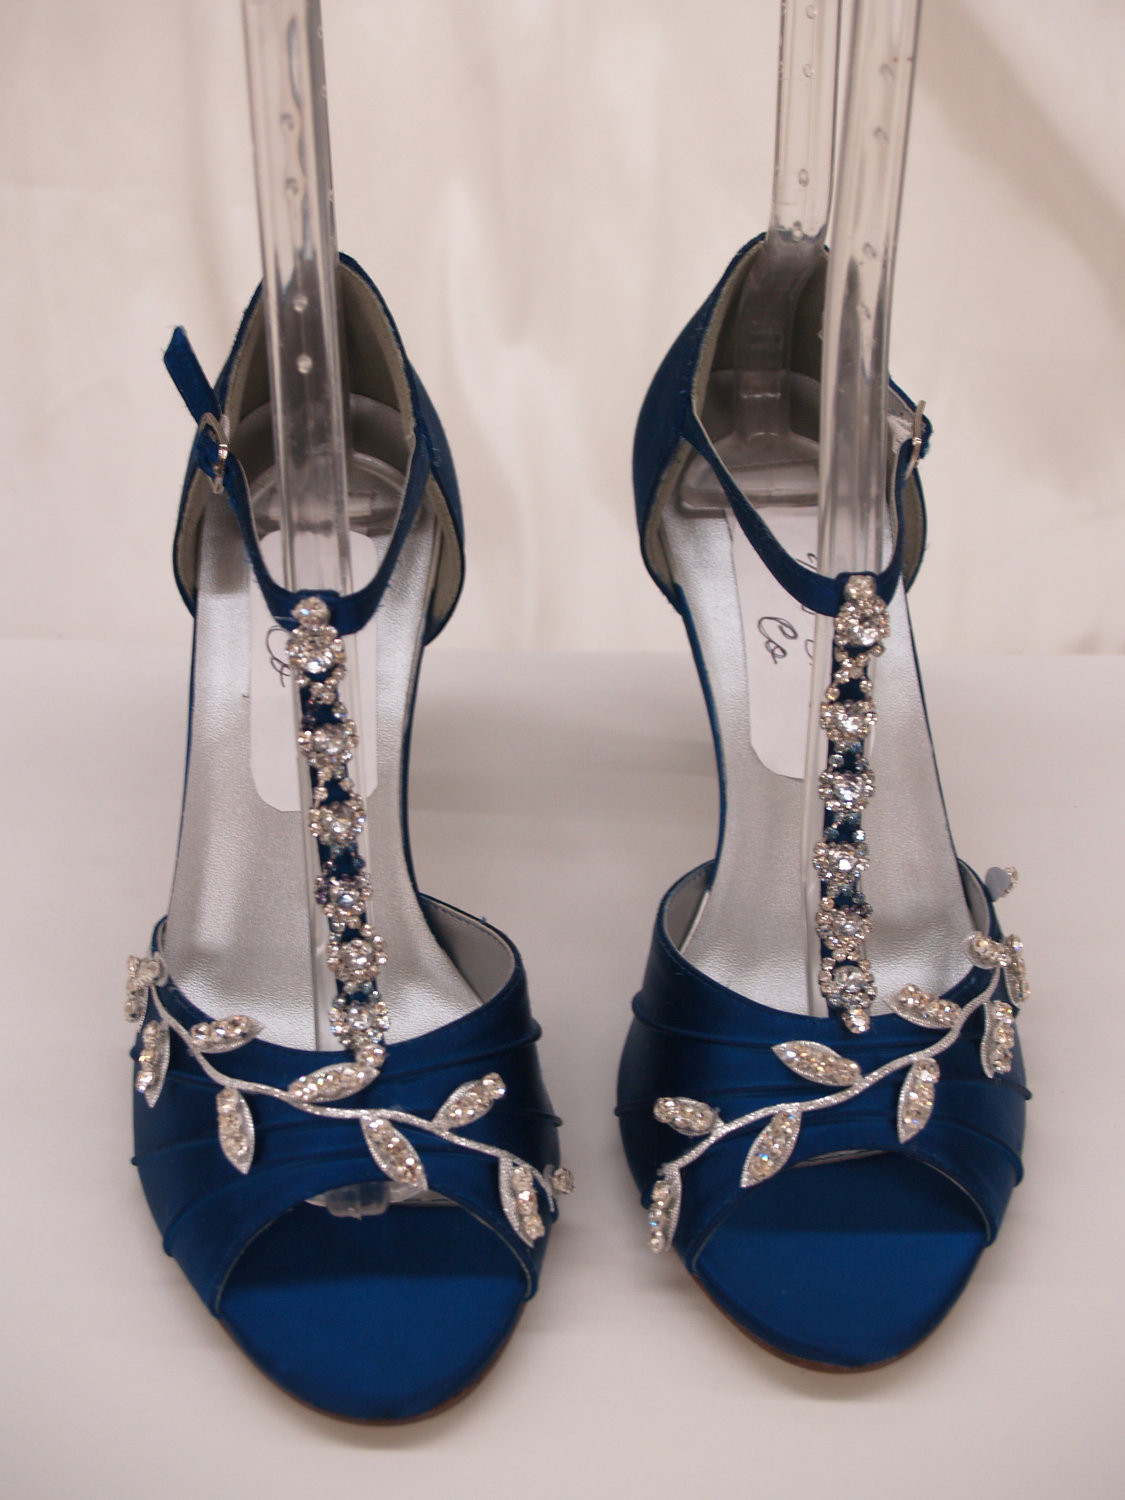 Blue Shoes Wedding
 Blue Wedding Shoes Royal Blue with Silver Swarovski